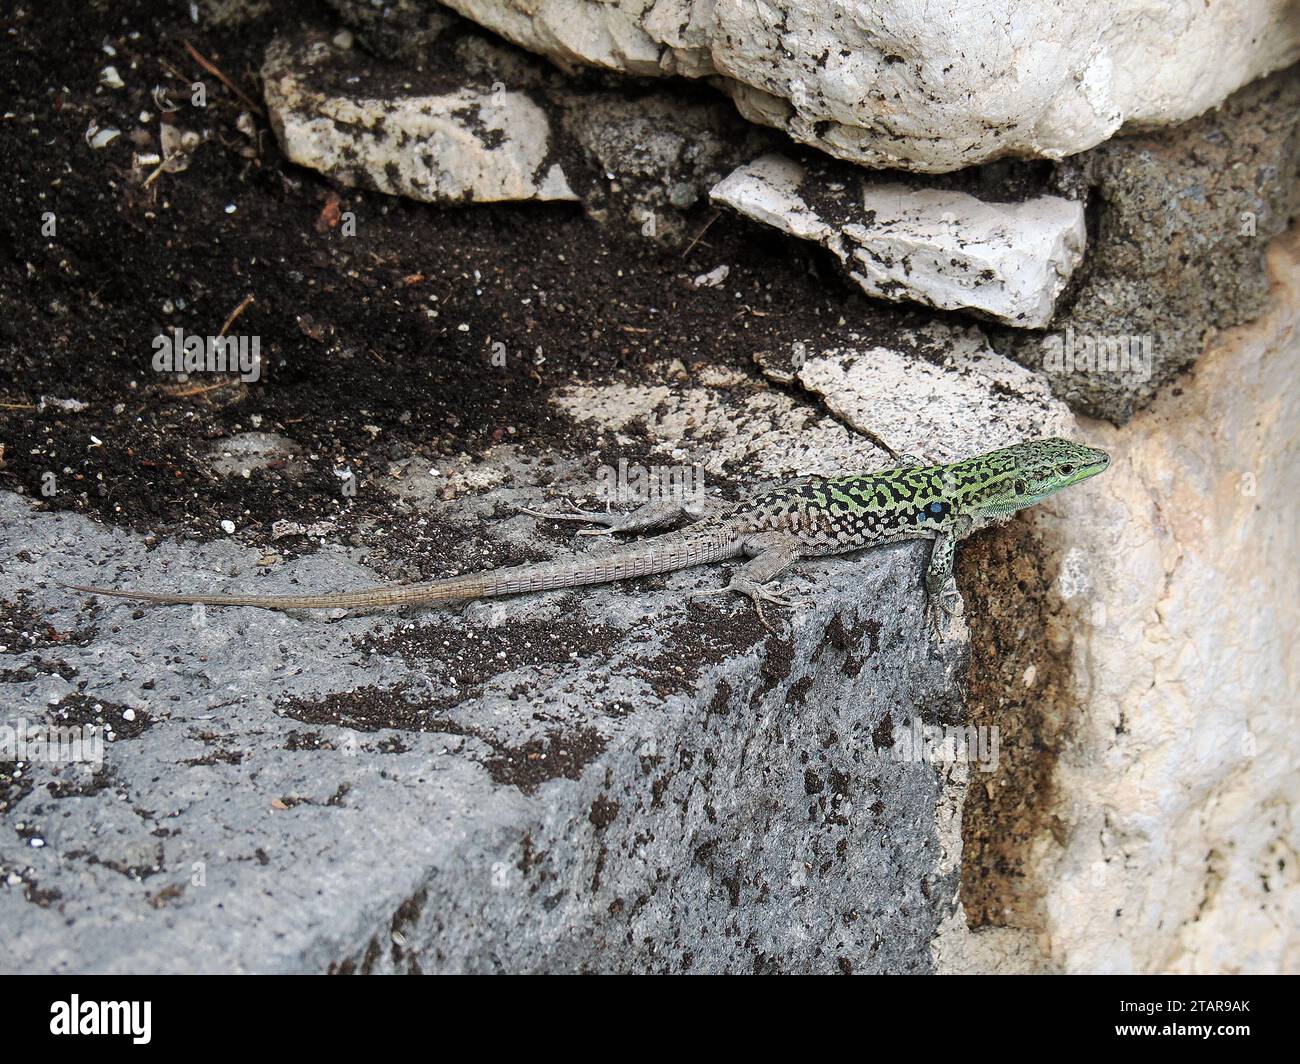 Italian wall lizard, ruin lizard, Ruineneidechse, Lézard sicilien, Podarcis siculus siculus, olasz faligyík, Sicily, Sicilia, Italy, Europe Stock Photo